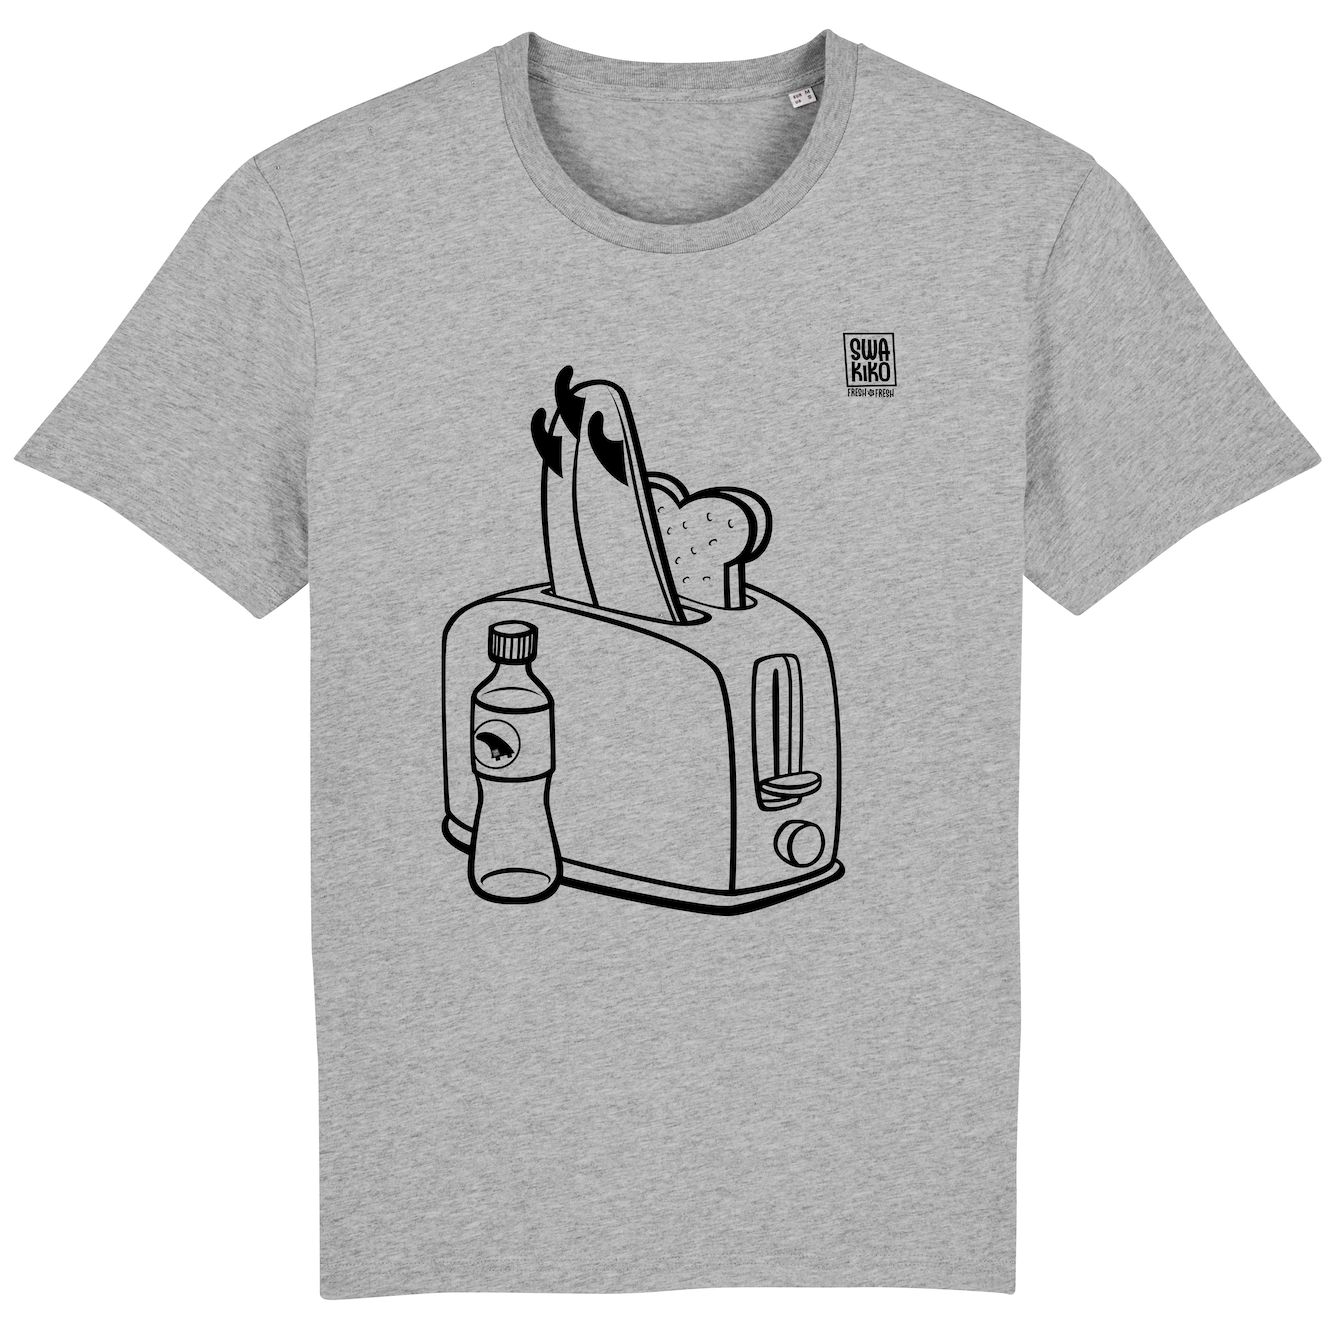 Surf t-shirt men grey, Toaster